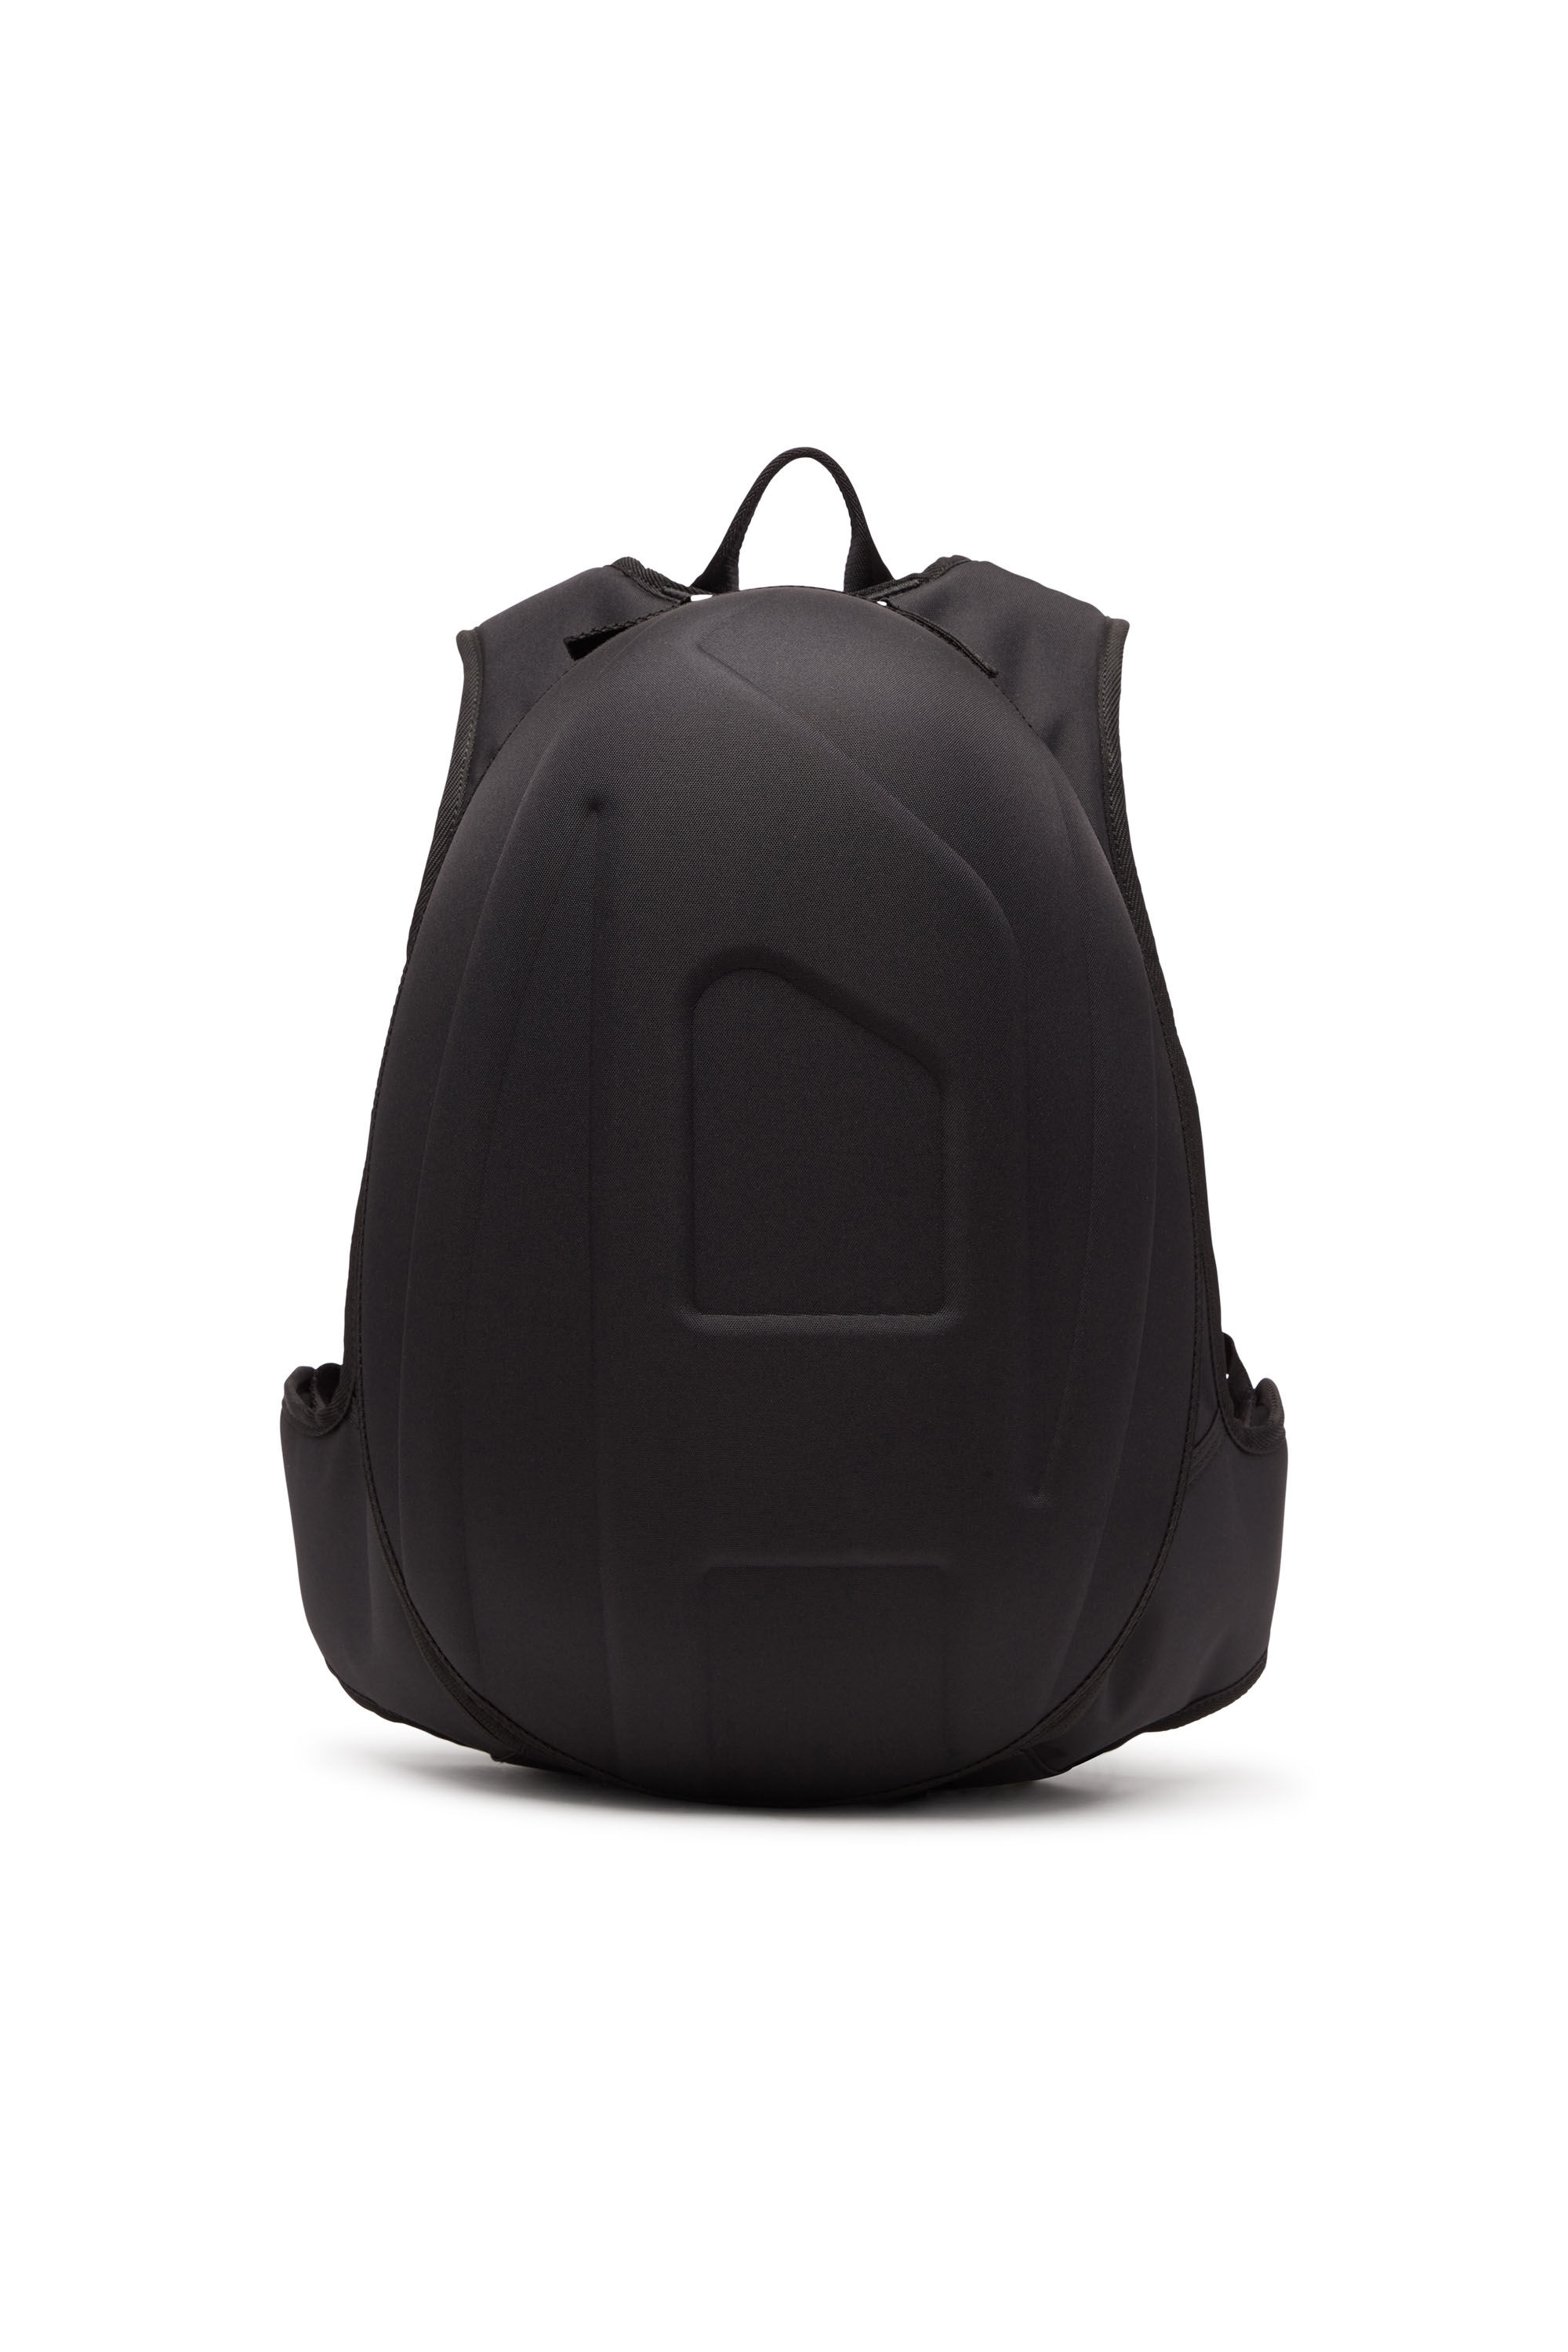 1DR-POD BACKPACK Man: Hard shell backpack | Diesel